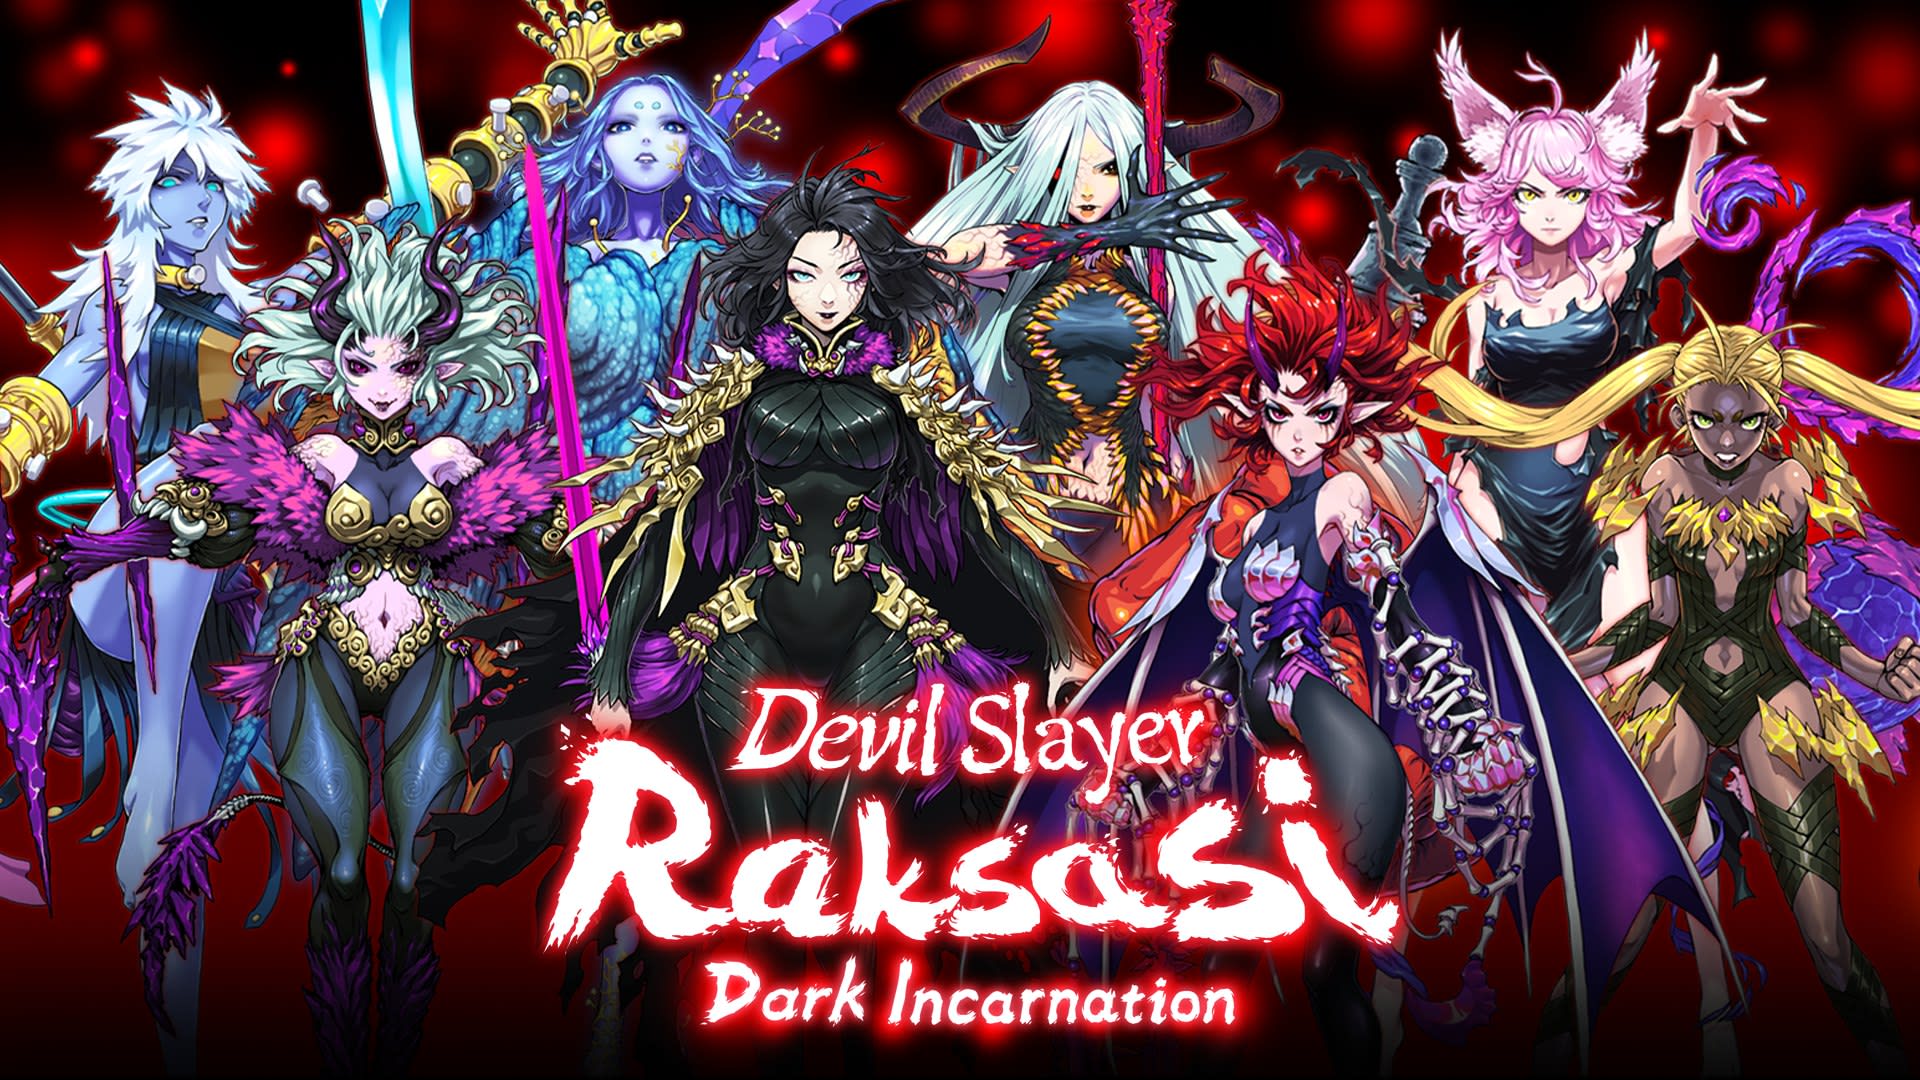 Devil Slayer Raksasi: Incarnation of Darkness 1